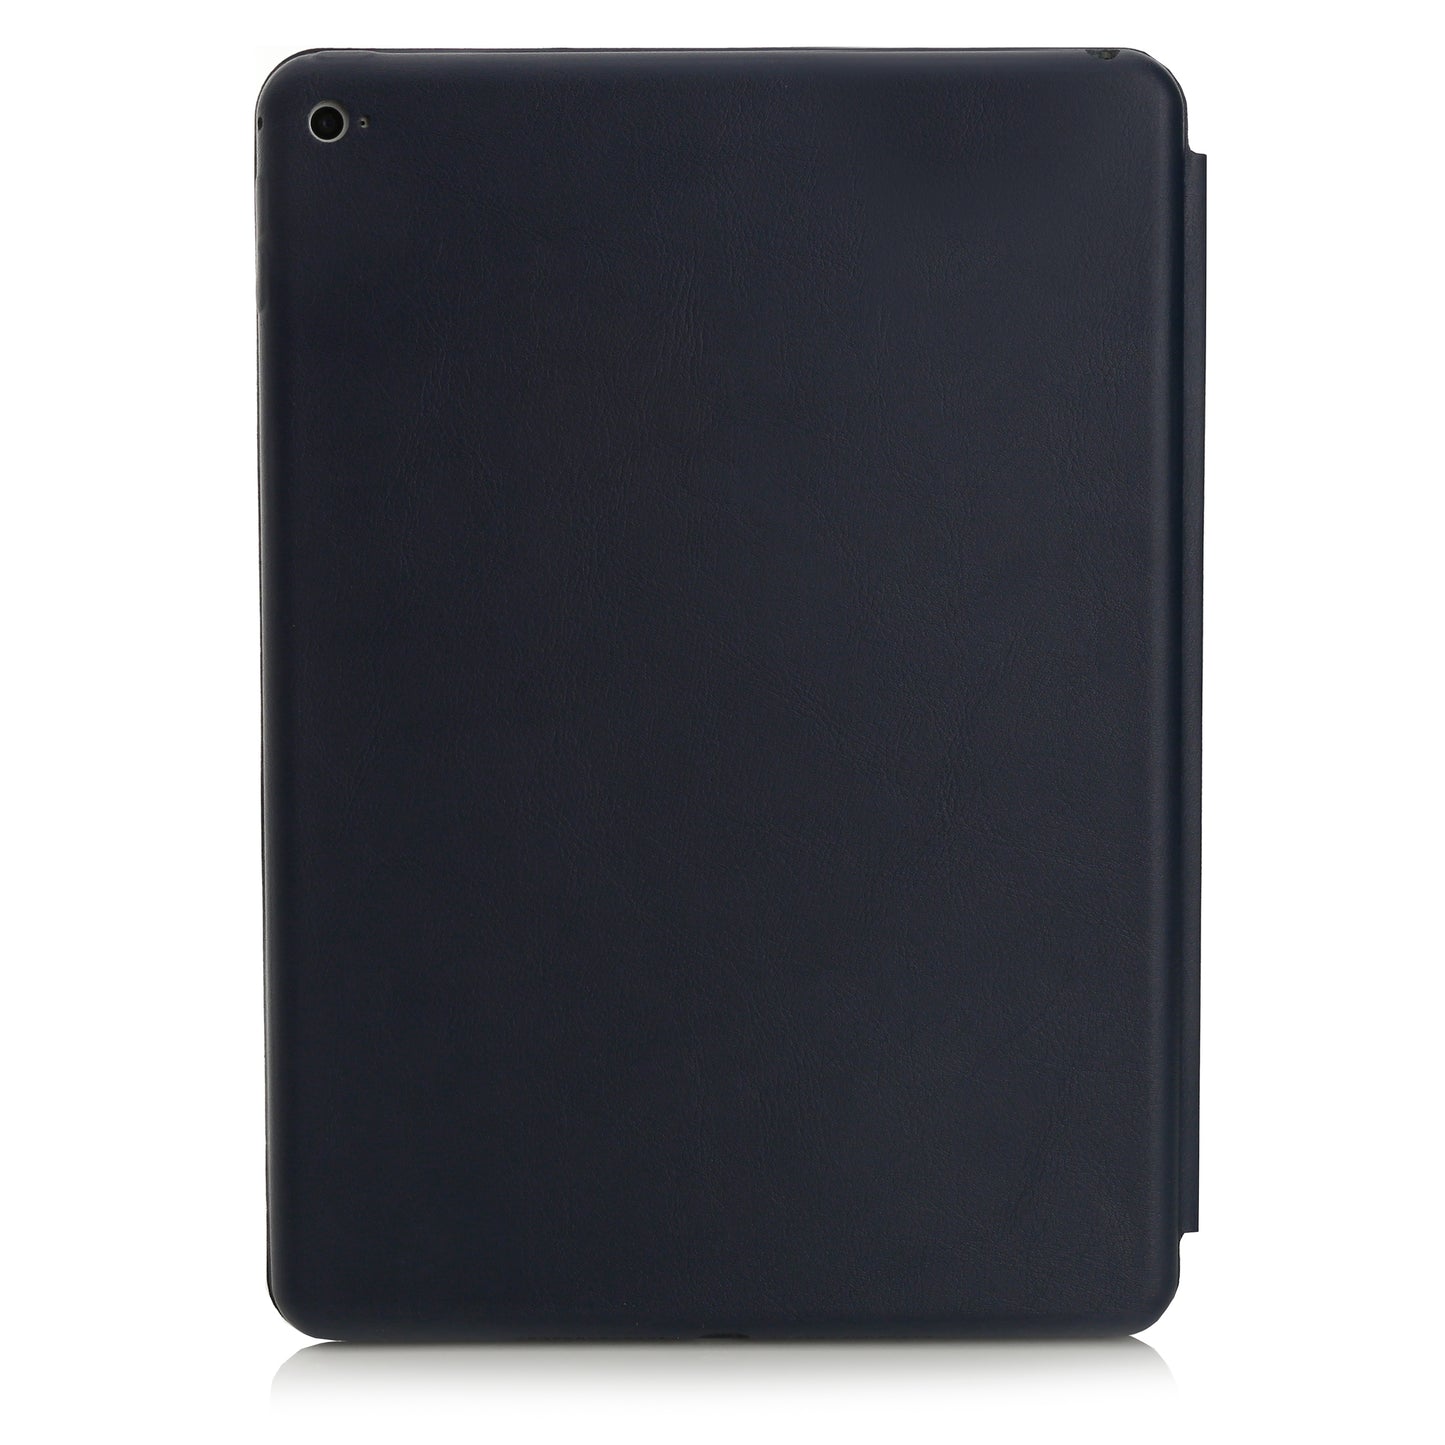 iCEO iPad mini 5 SmartCover Case